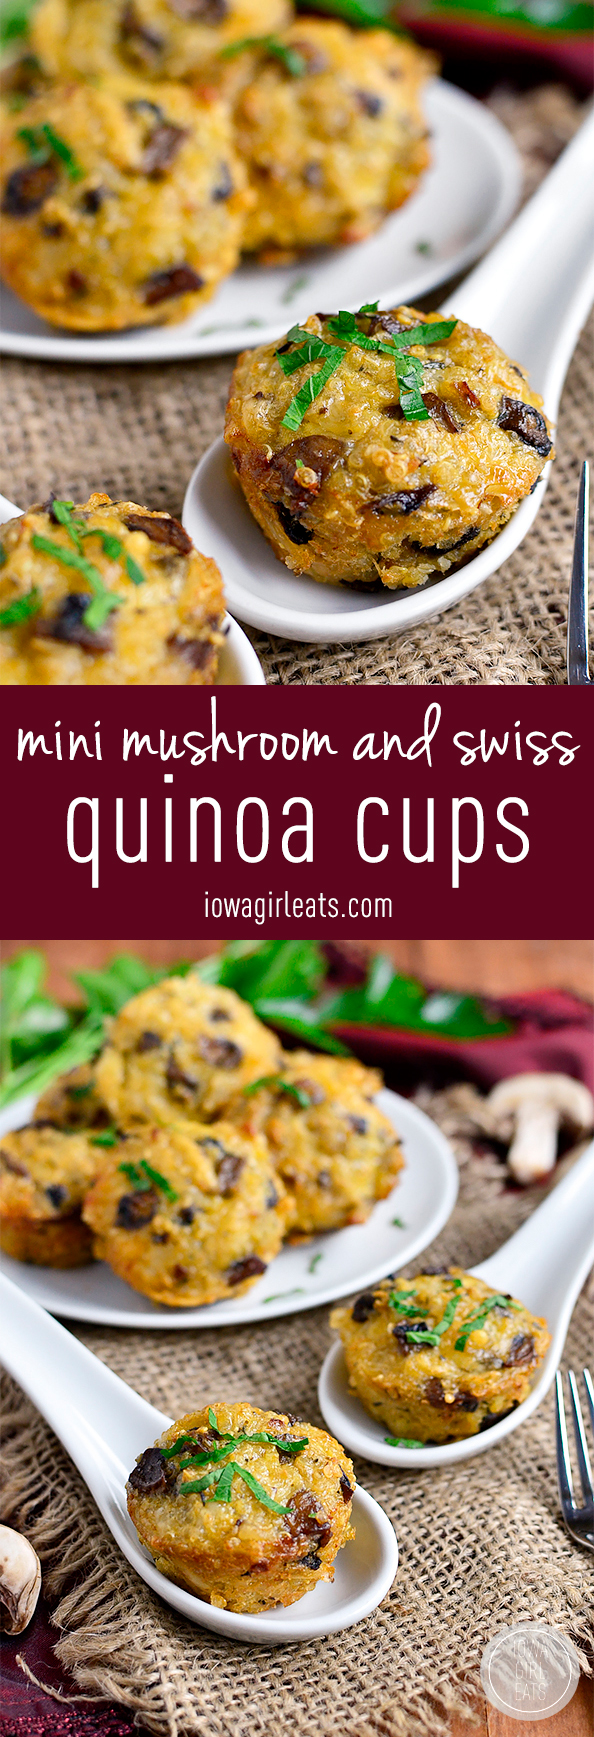 Mini-Mushroom-and-Swiss-Quinoa-Cups-iowagirleats-Vertical